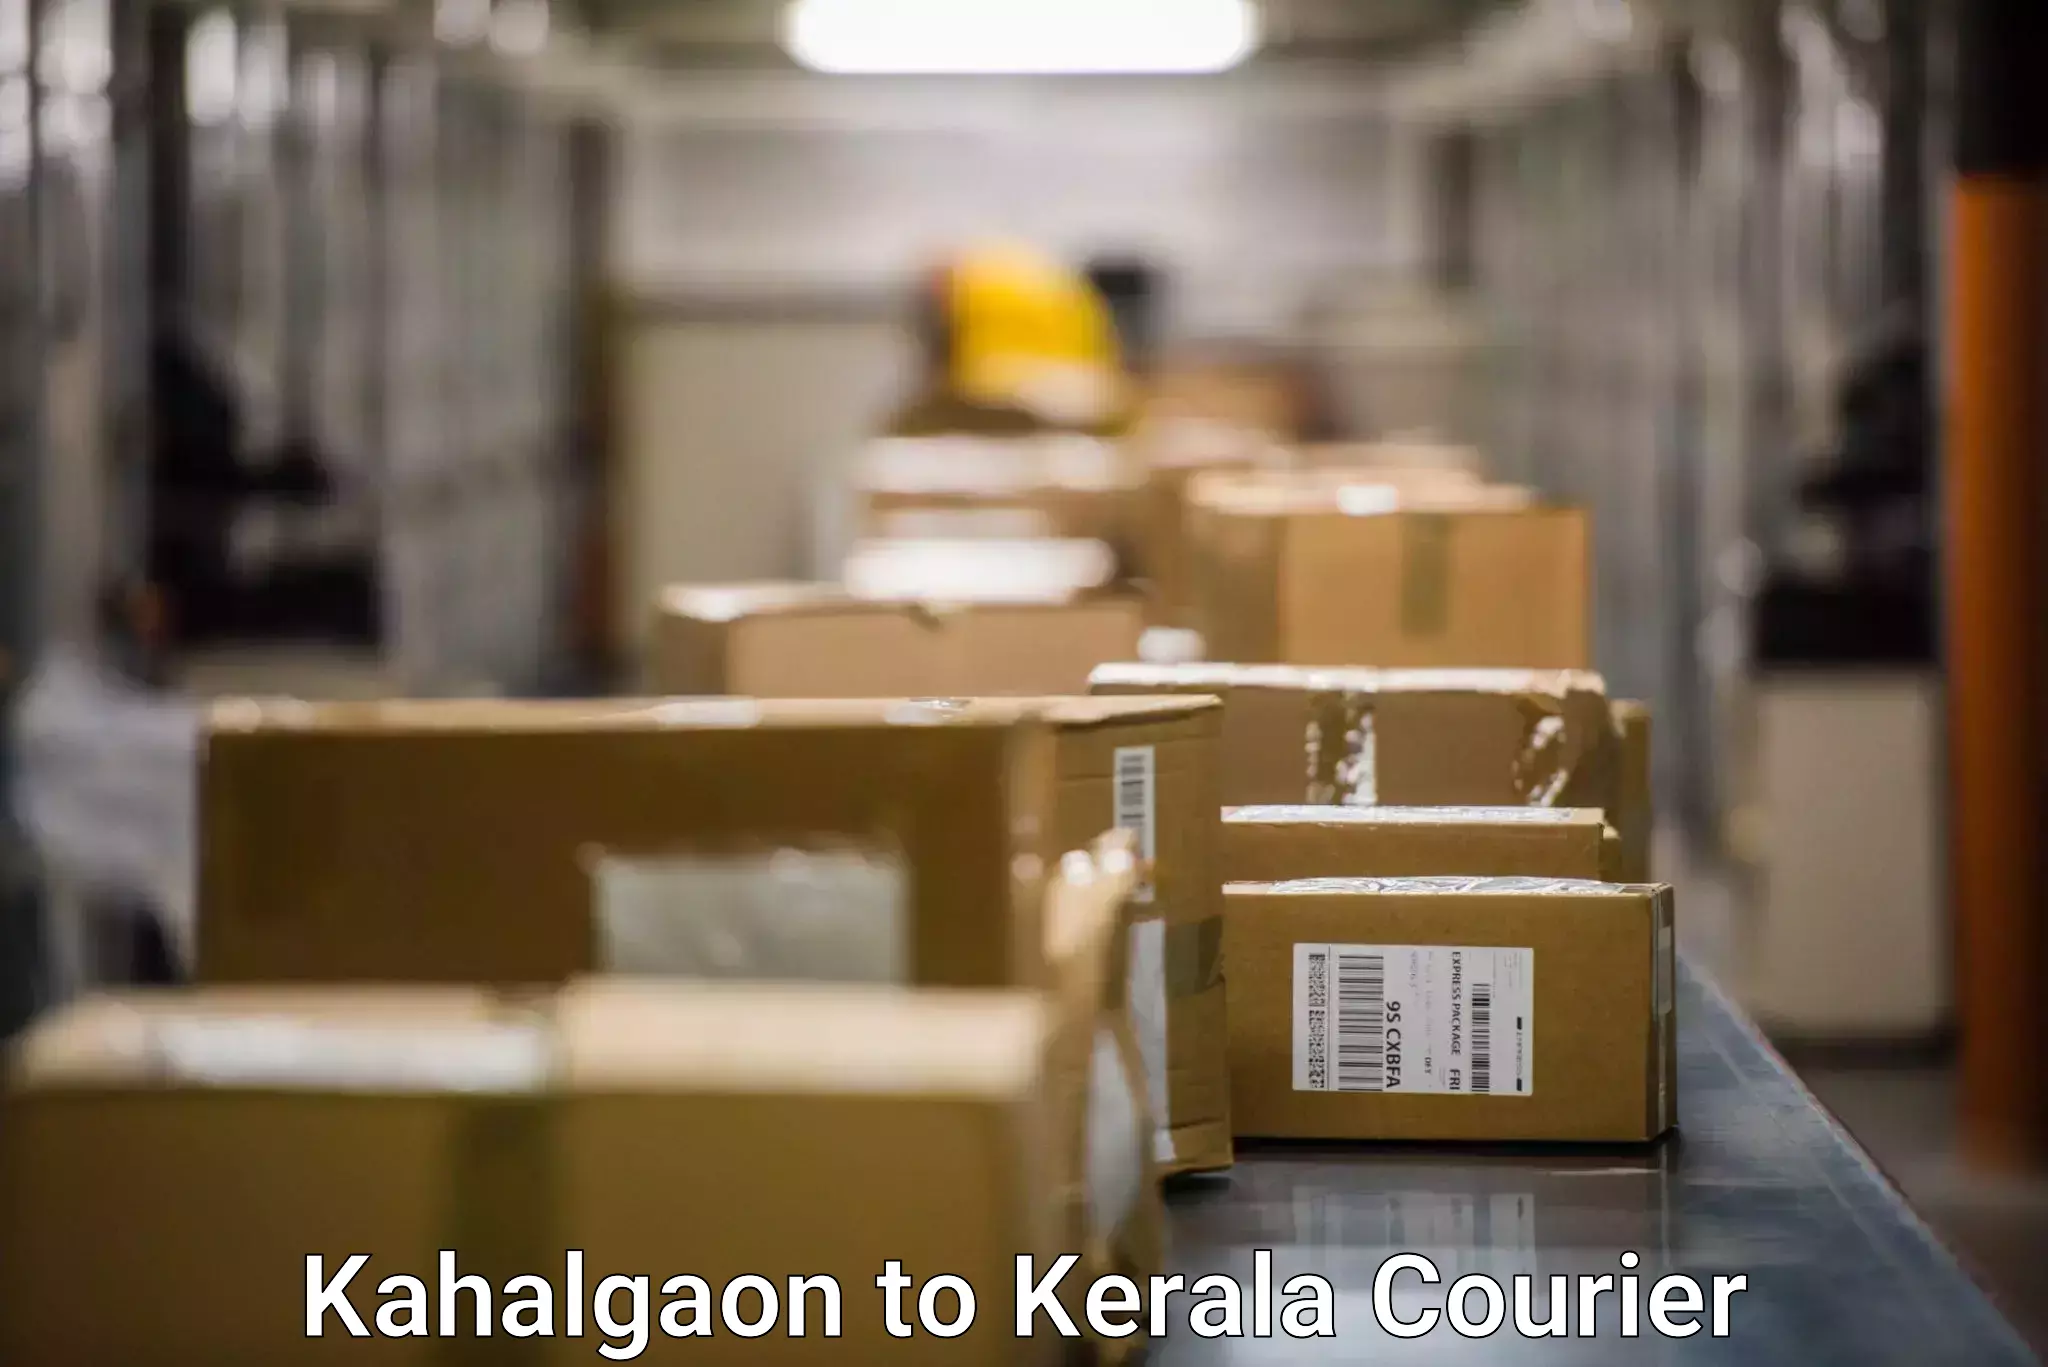 Logistics and distribution Kahalgaon to Kochi